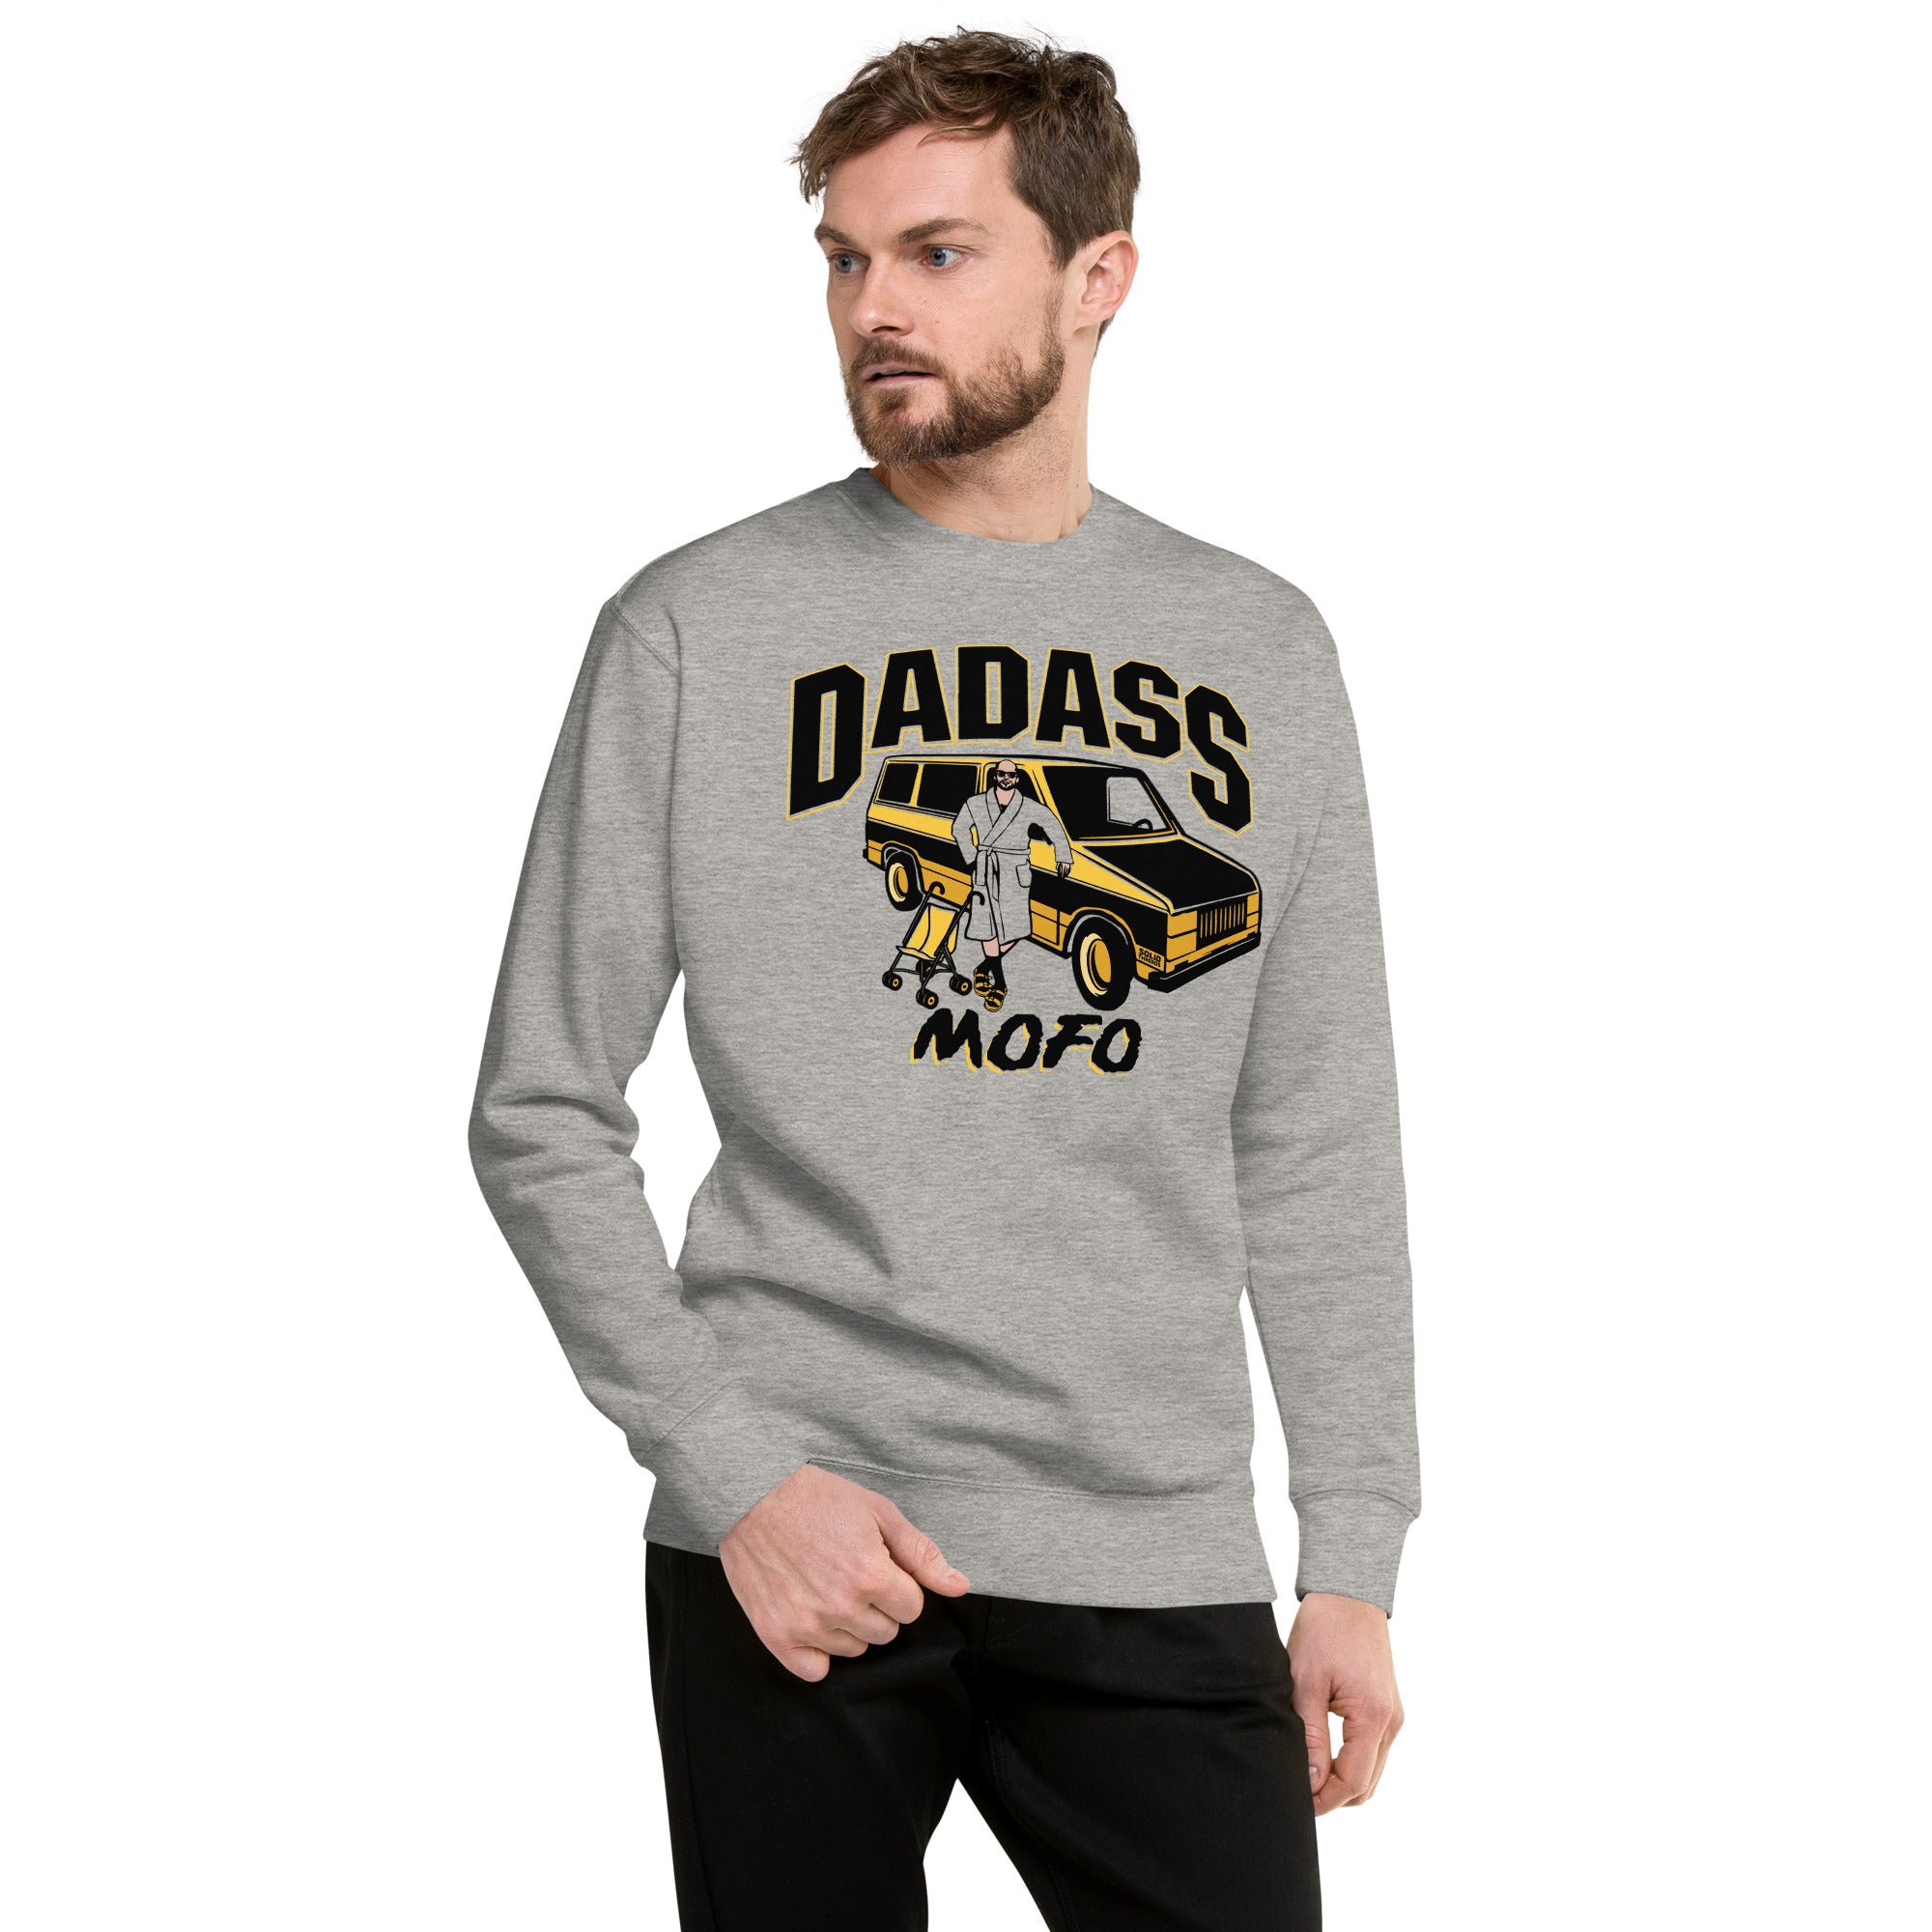 Dadass Vintage Classic Sweatshirt | Funny Parenting Fleece on Model | Solid Threads